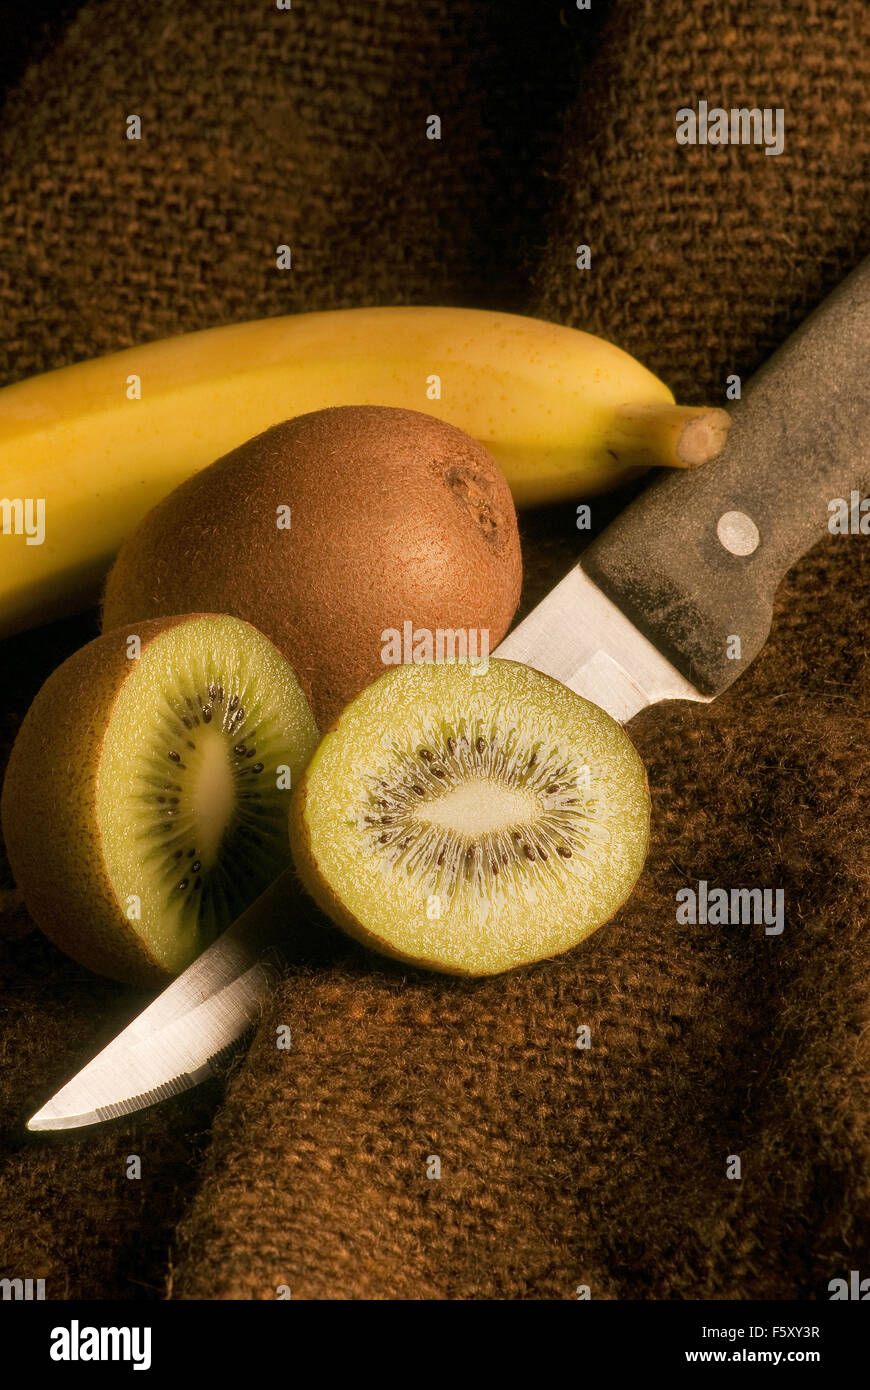 kiwi fruit with a banana Stock Photo